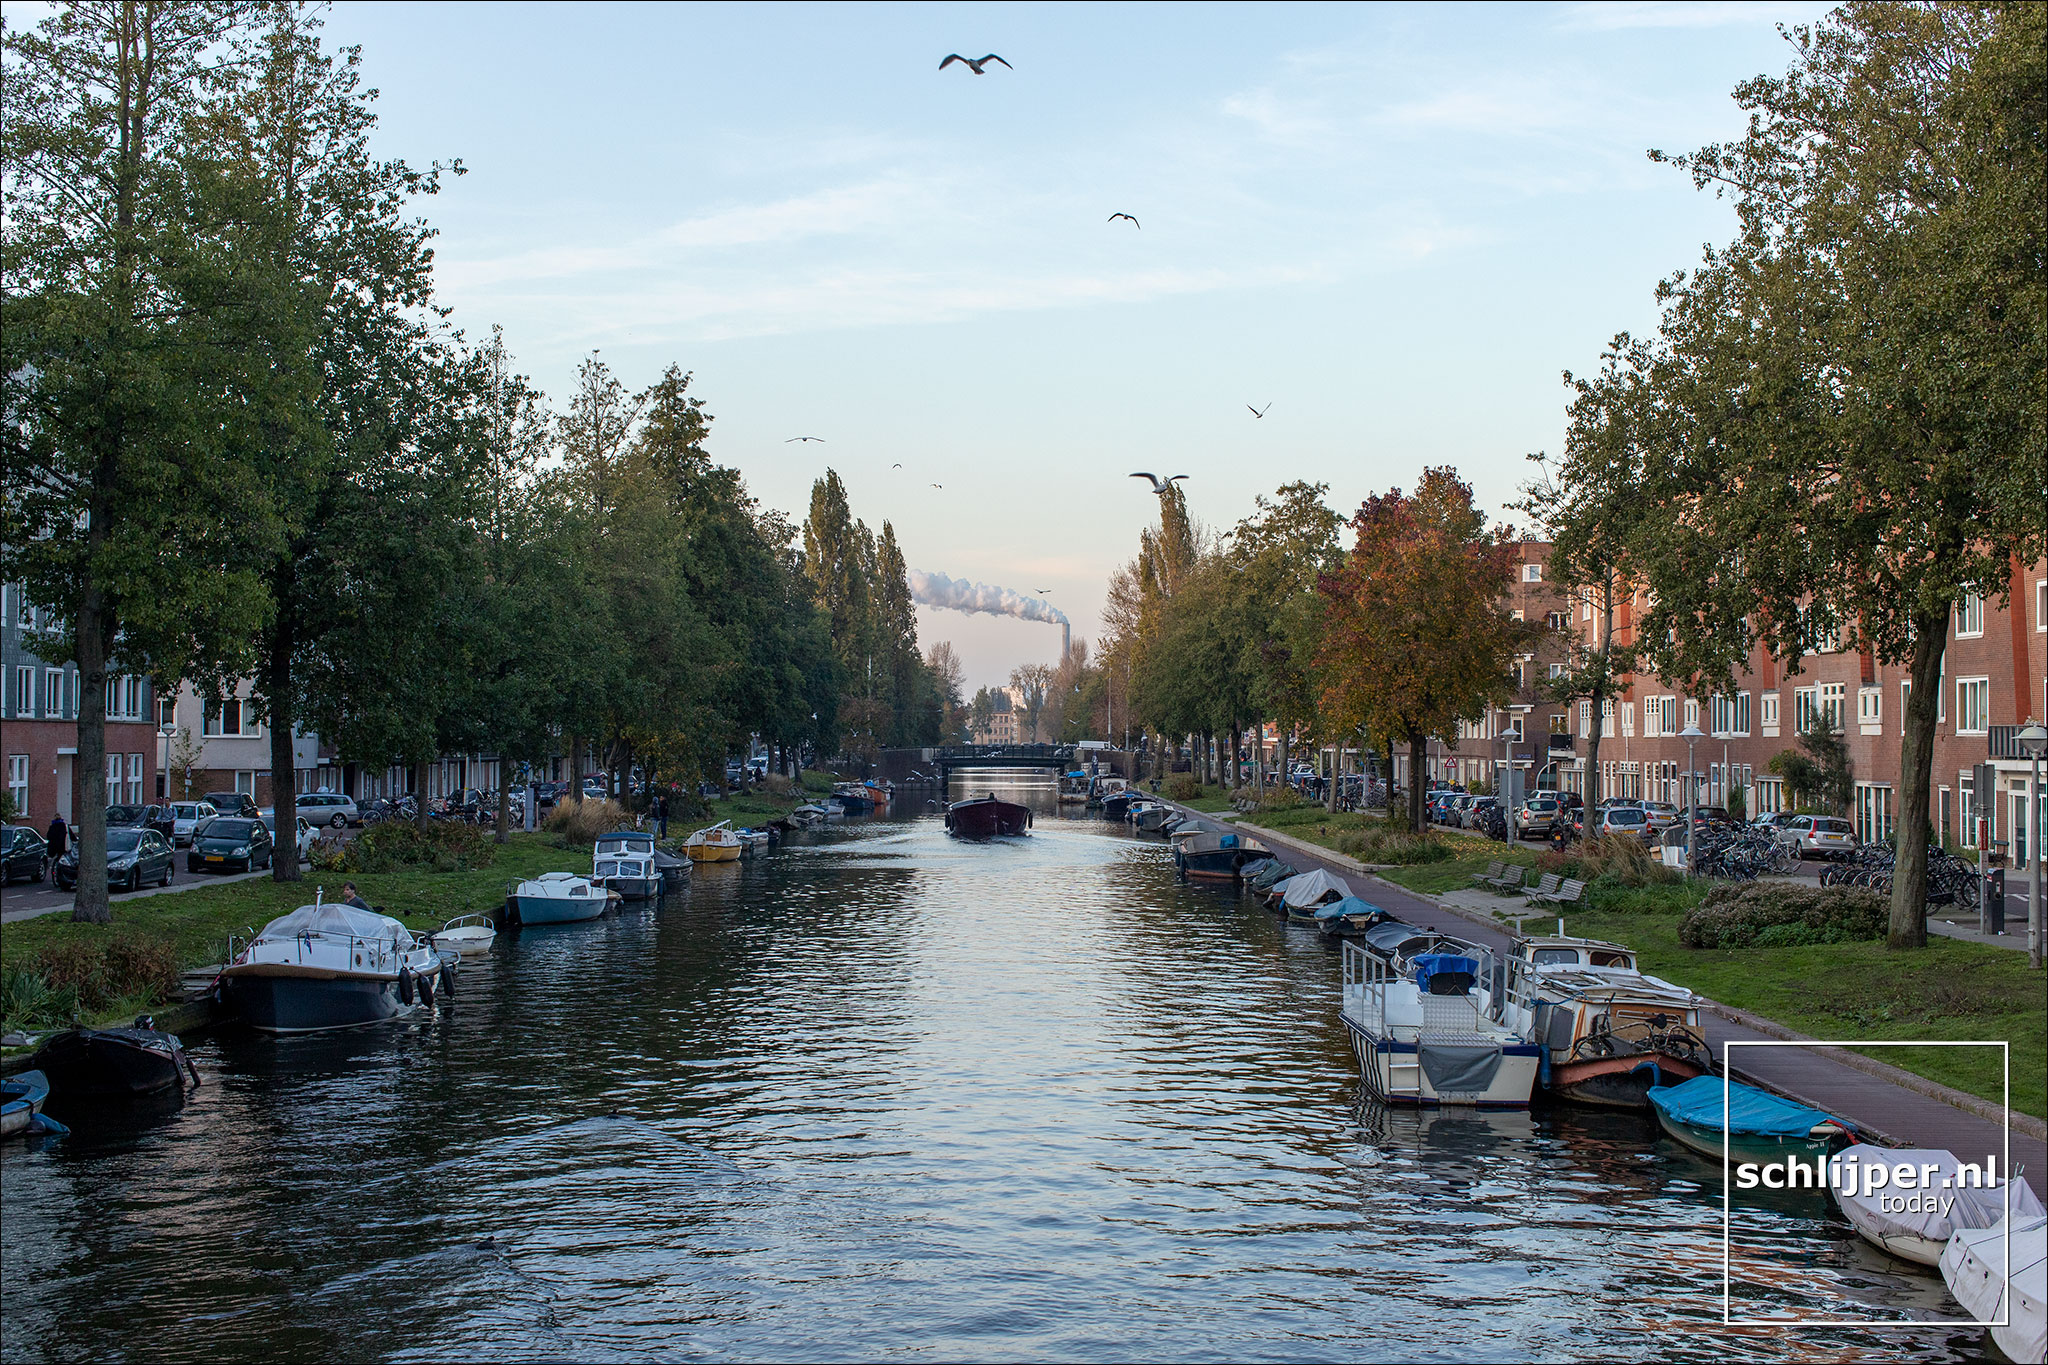 The Netherlands, Amsterdam, 31 oktober 2019